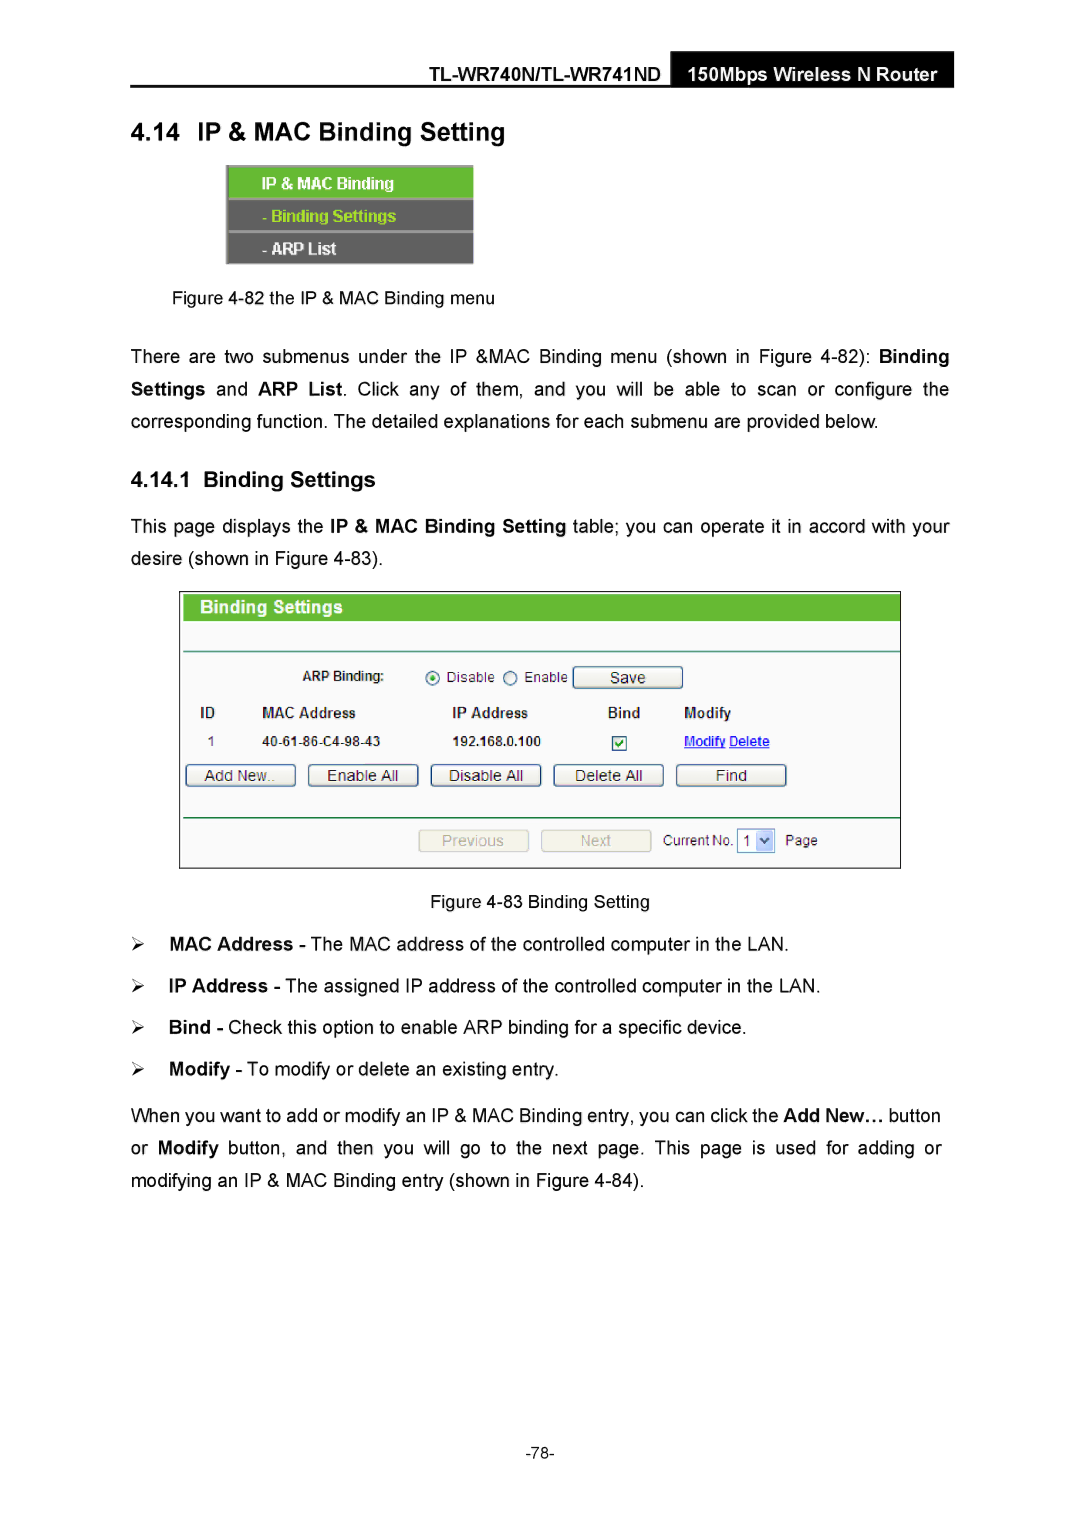 TP-Link TL-WR741ND manual 14 IP & MAC Binding Setting, Binding Settings 